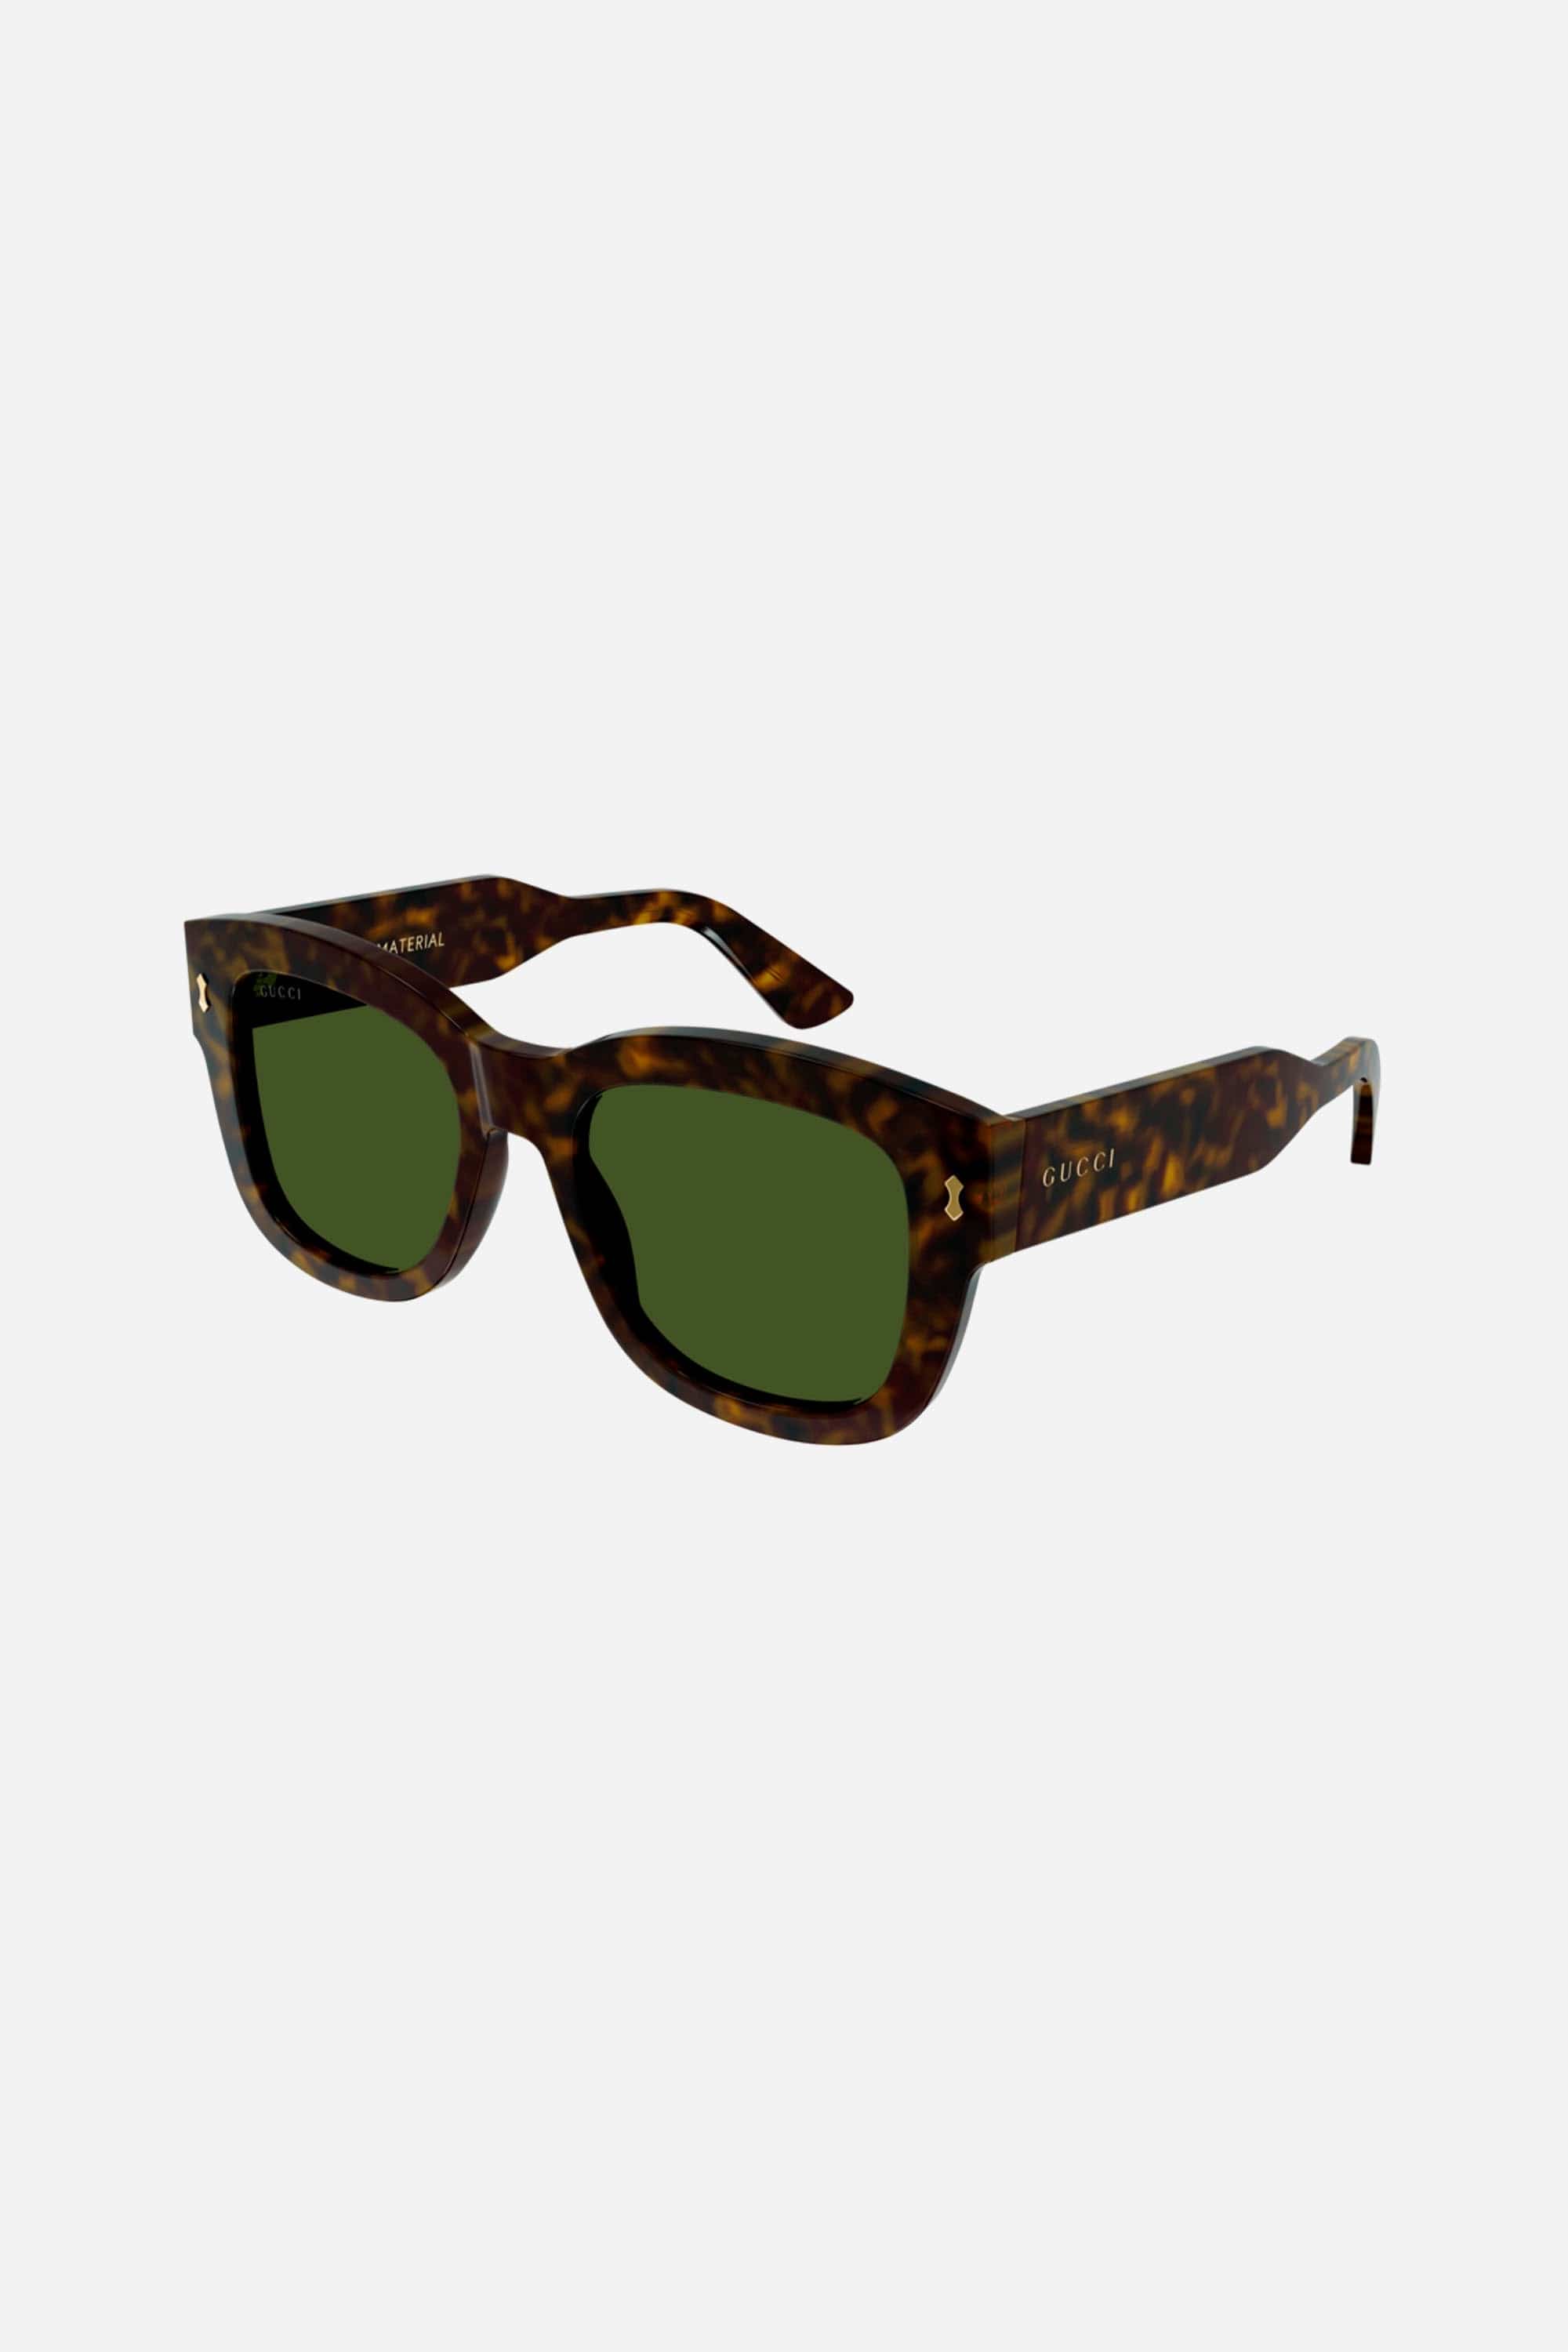 Gucci squared sustainable havana green sunglasses - Eyewear Club